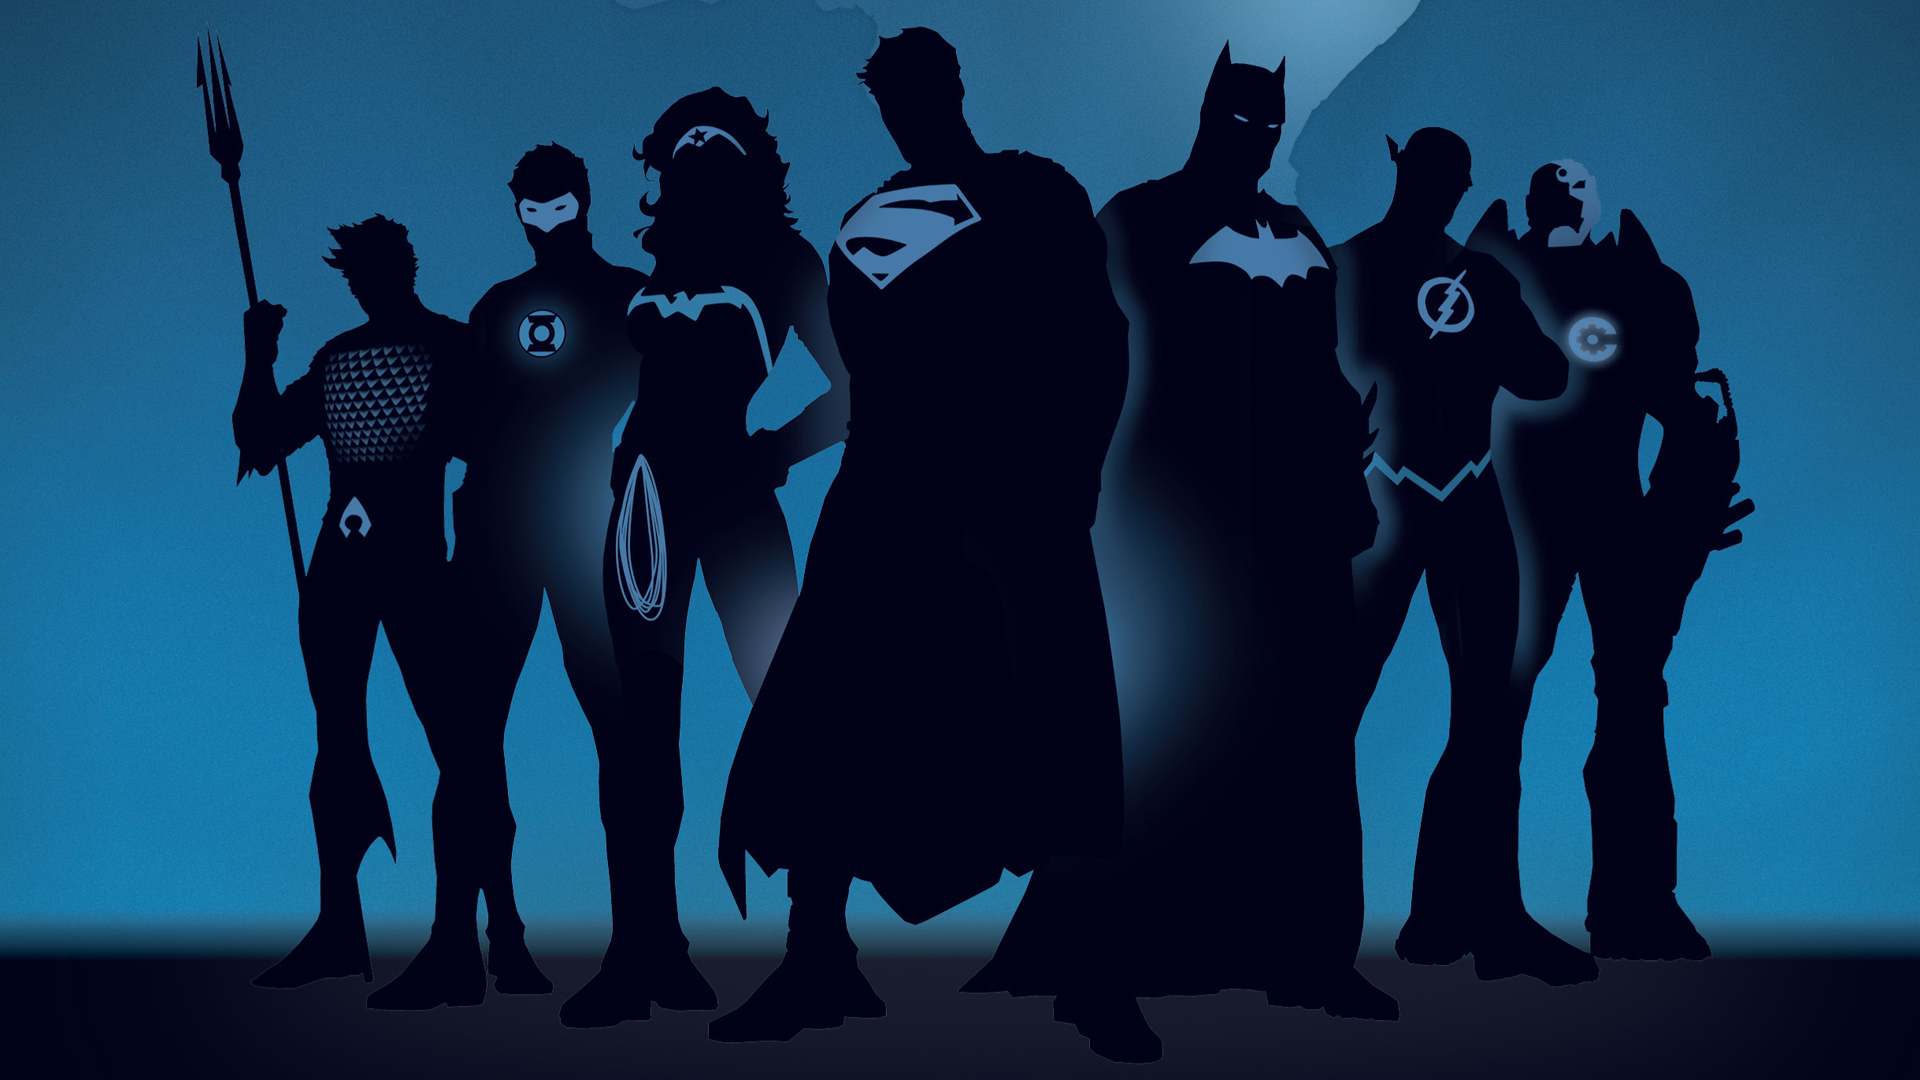 bruce wayne, batman, comics, diana prince, justice league, superman, dc comics, wonder woman, aquaman, barry allen, cyborg (dc comics), flash, green lantern, the dark knight cellphone